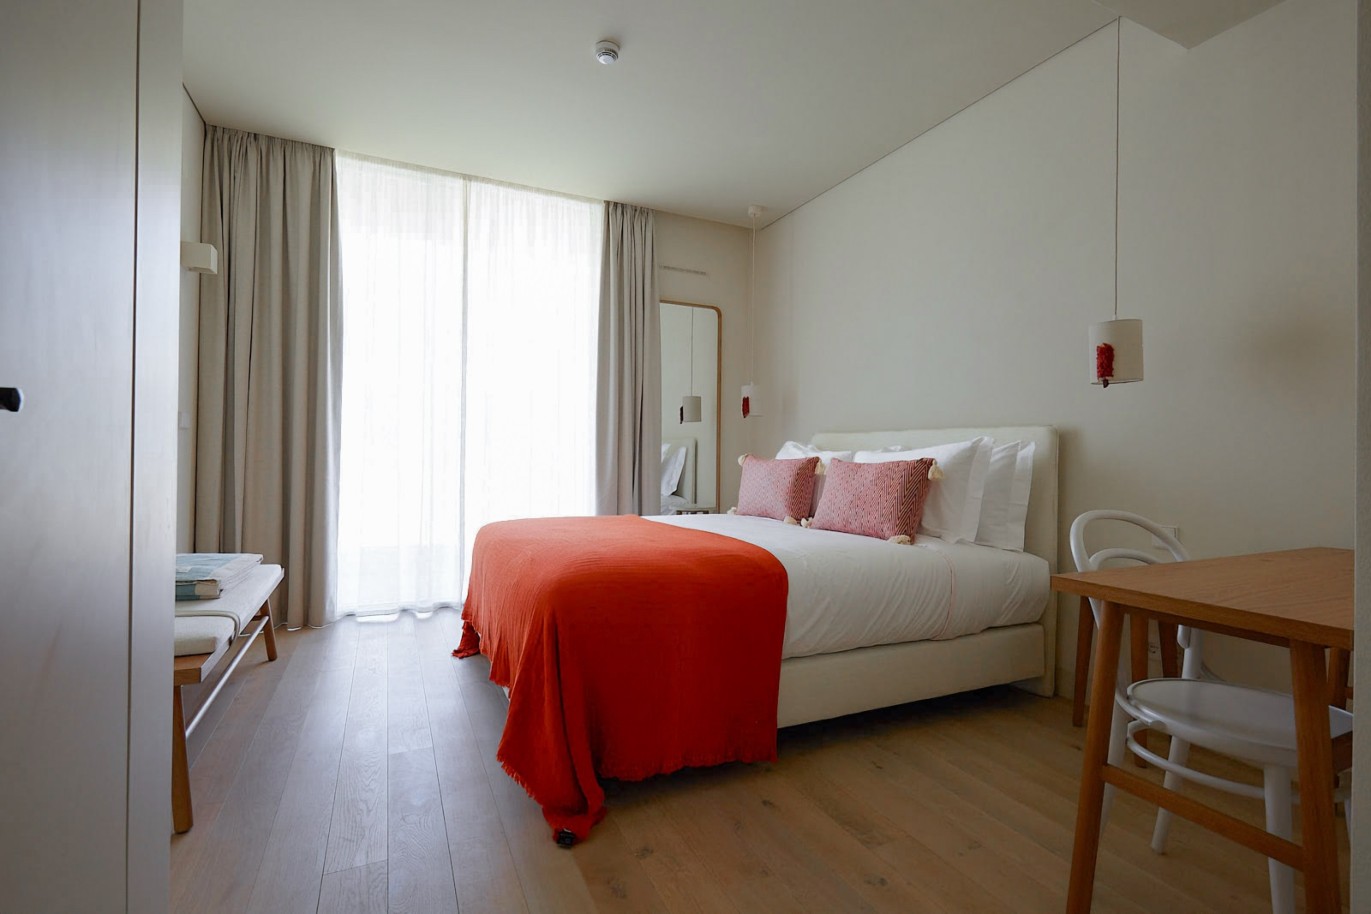 2 bedroom apartment in resort, for sale in Porches, Algarve_228772